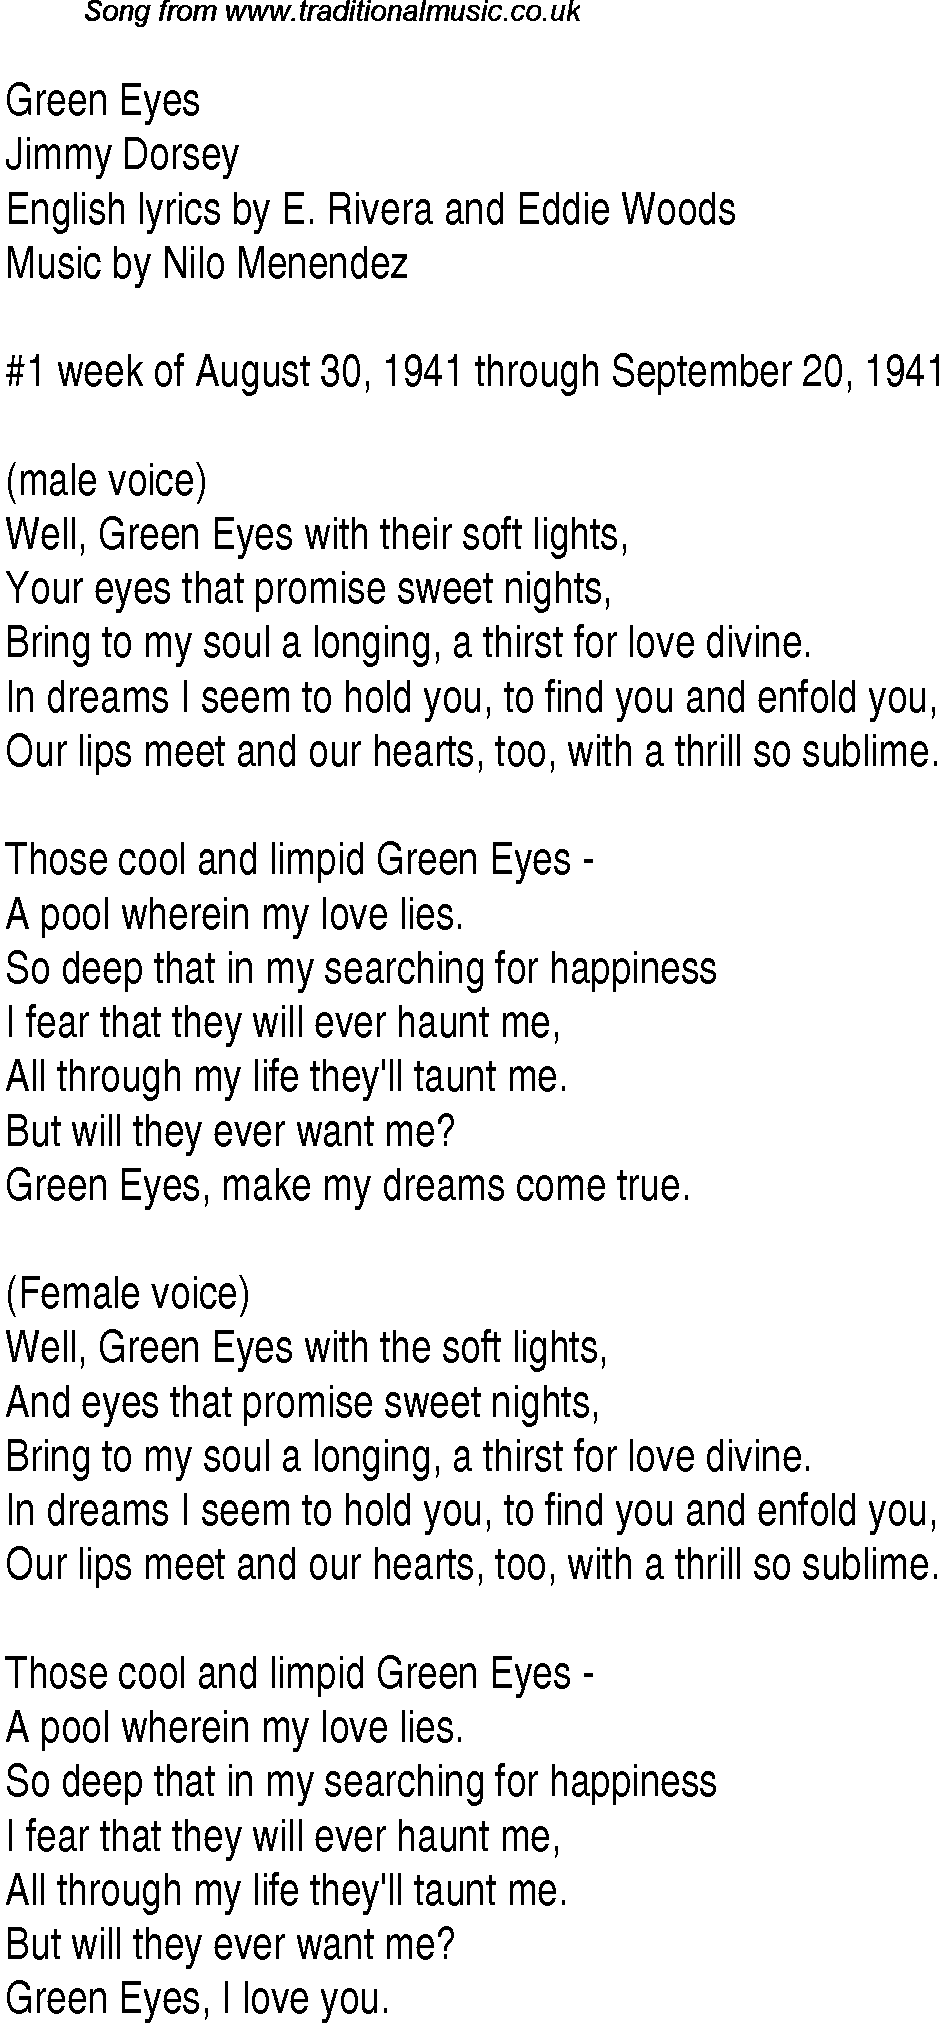 Music charts top songs 1941 - lyrics for Green Eyes